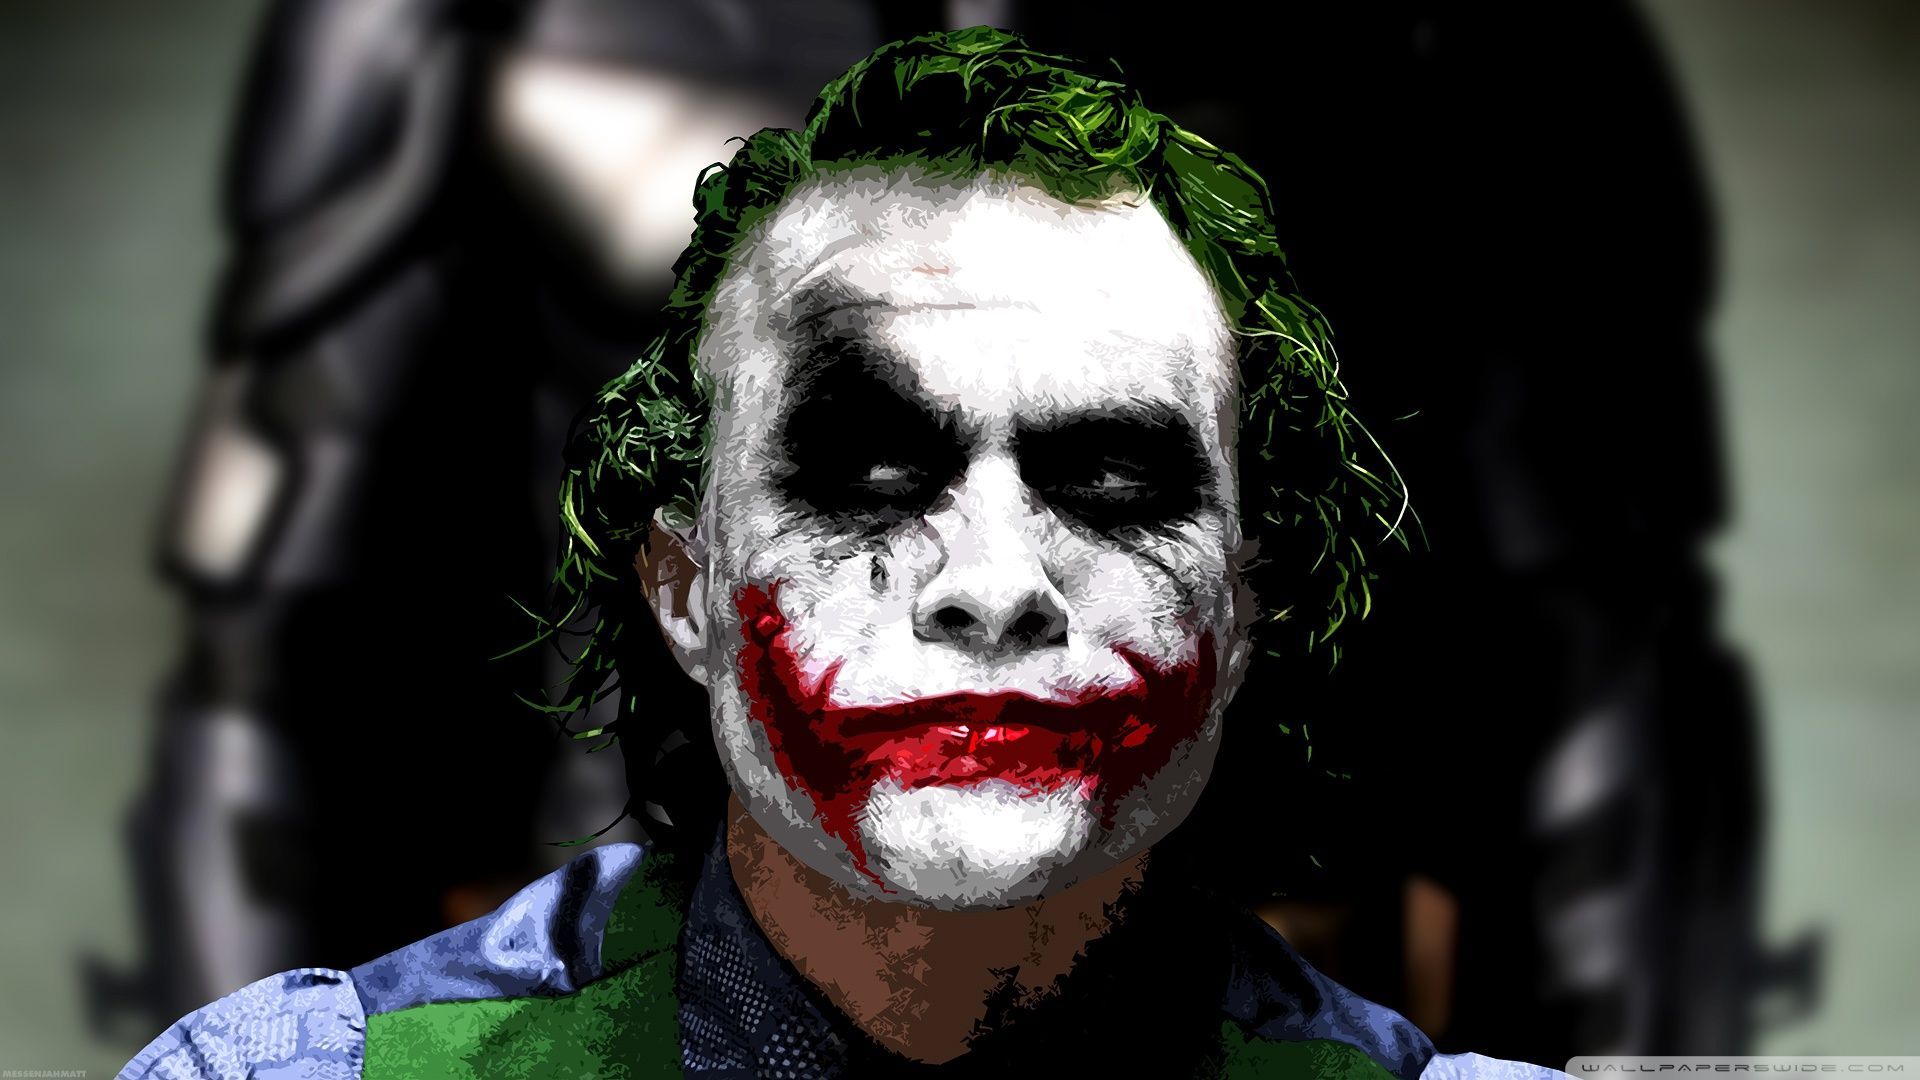 Heath Ledger The Joker HD Wallpaper 1920x1080 ID56151